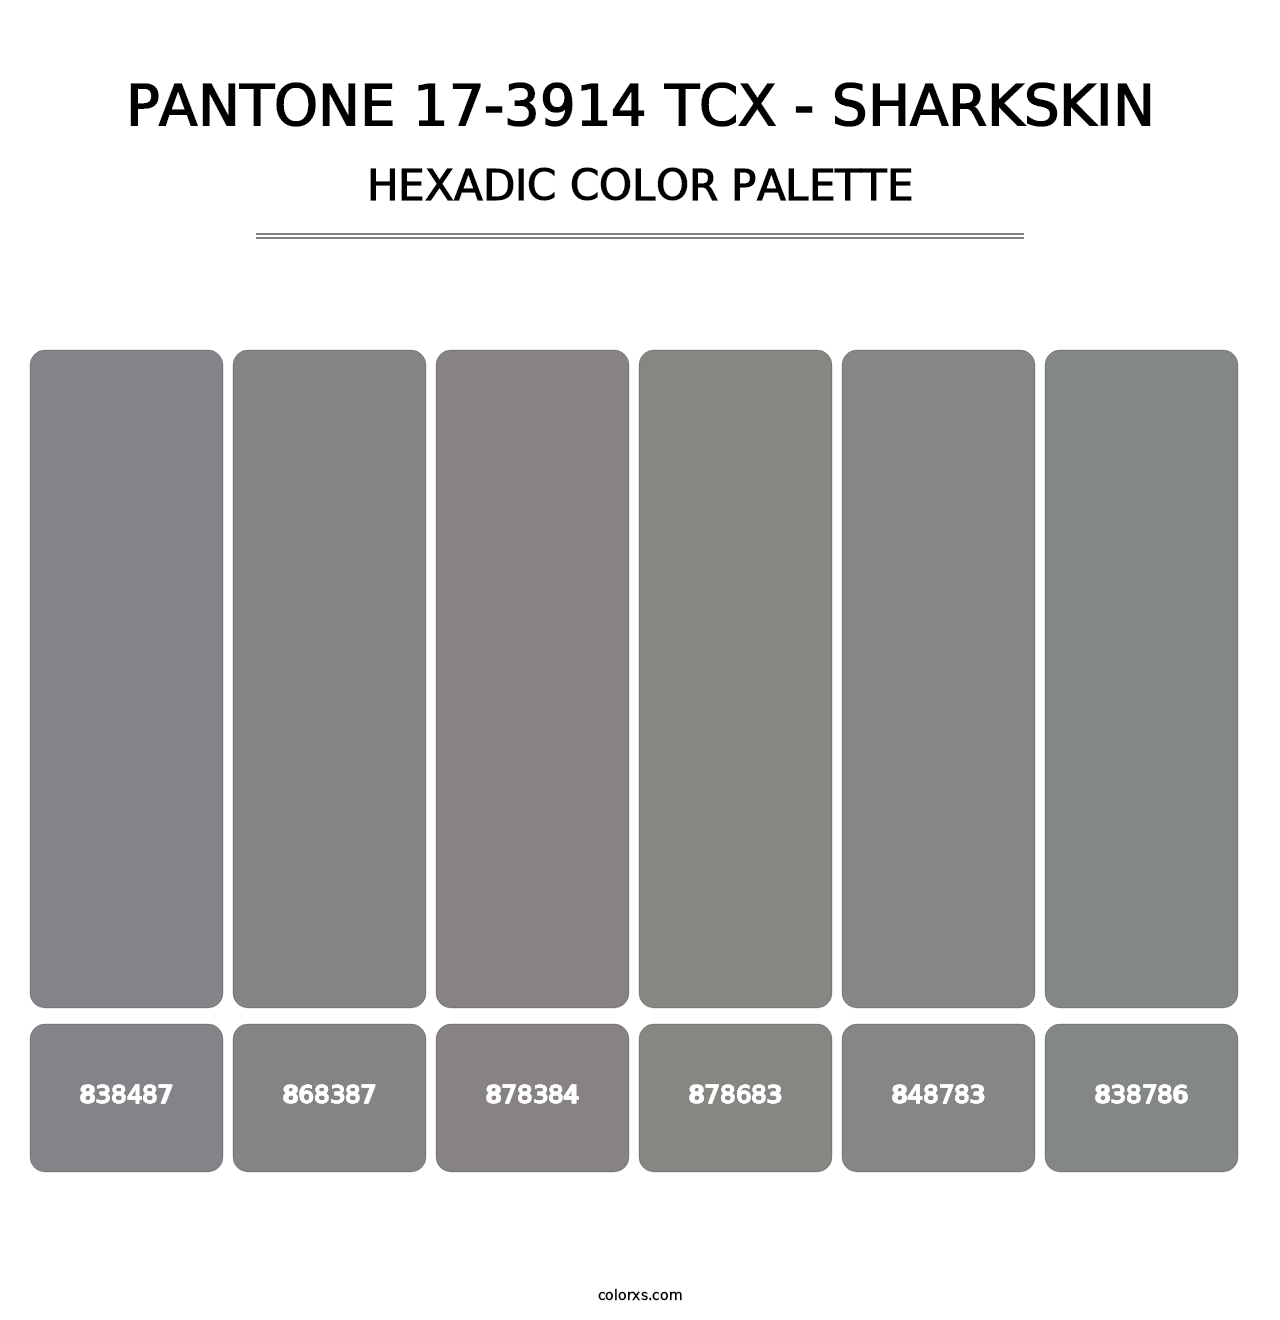 PANTONE 17-3914 TCX - Sharkskin - Hexadic Color Palette